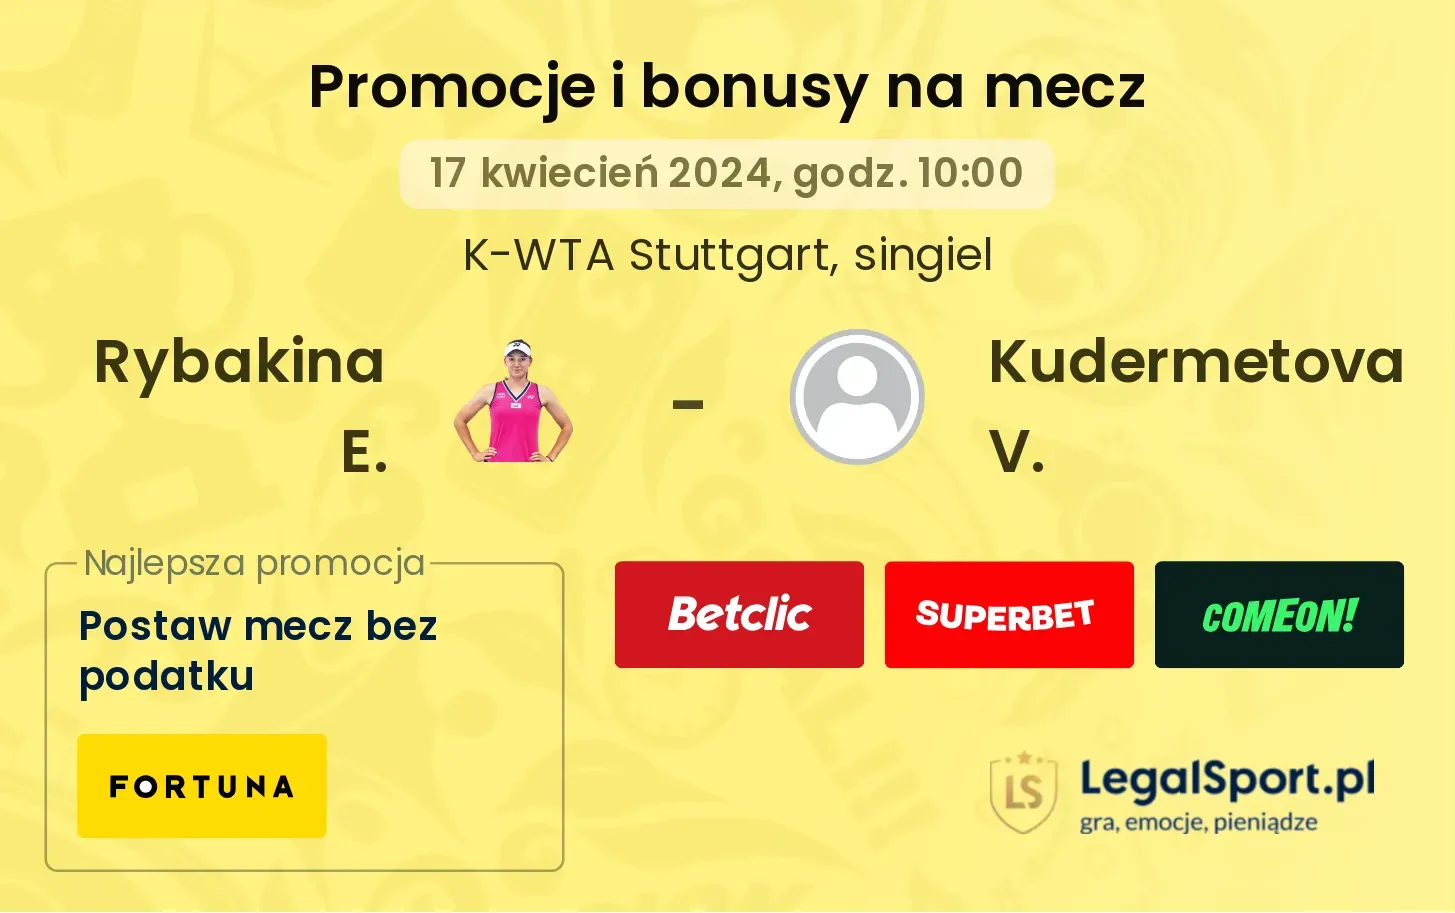 Rybakina E. - Kudermetova V. promocje bonusy na mecz